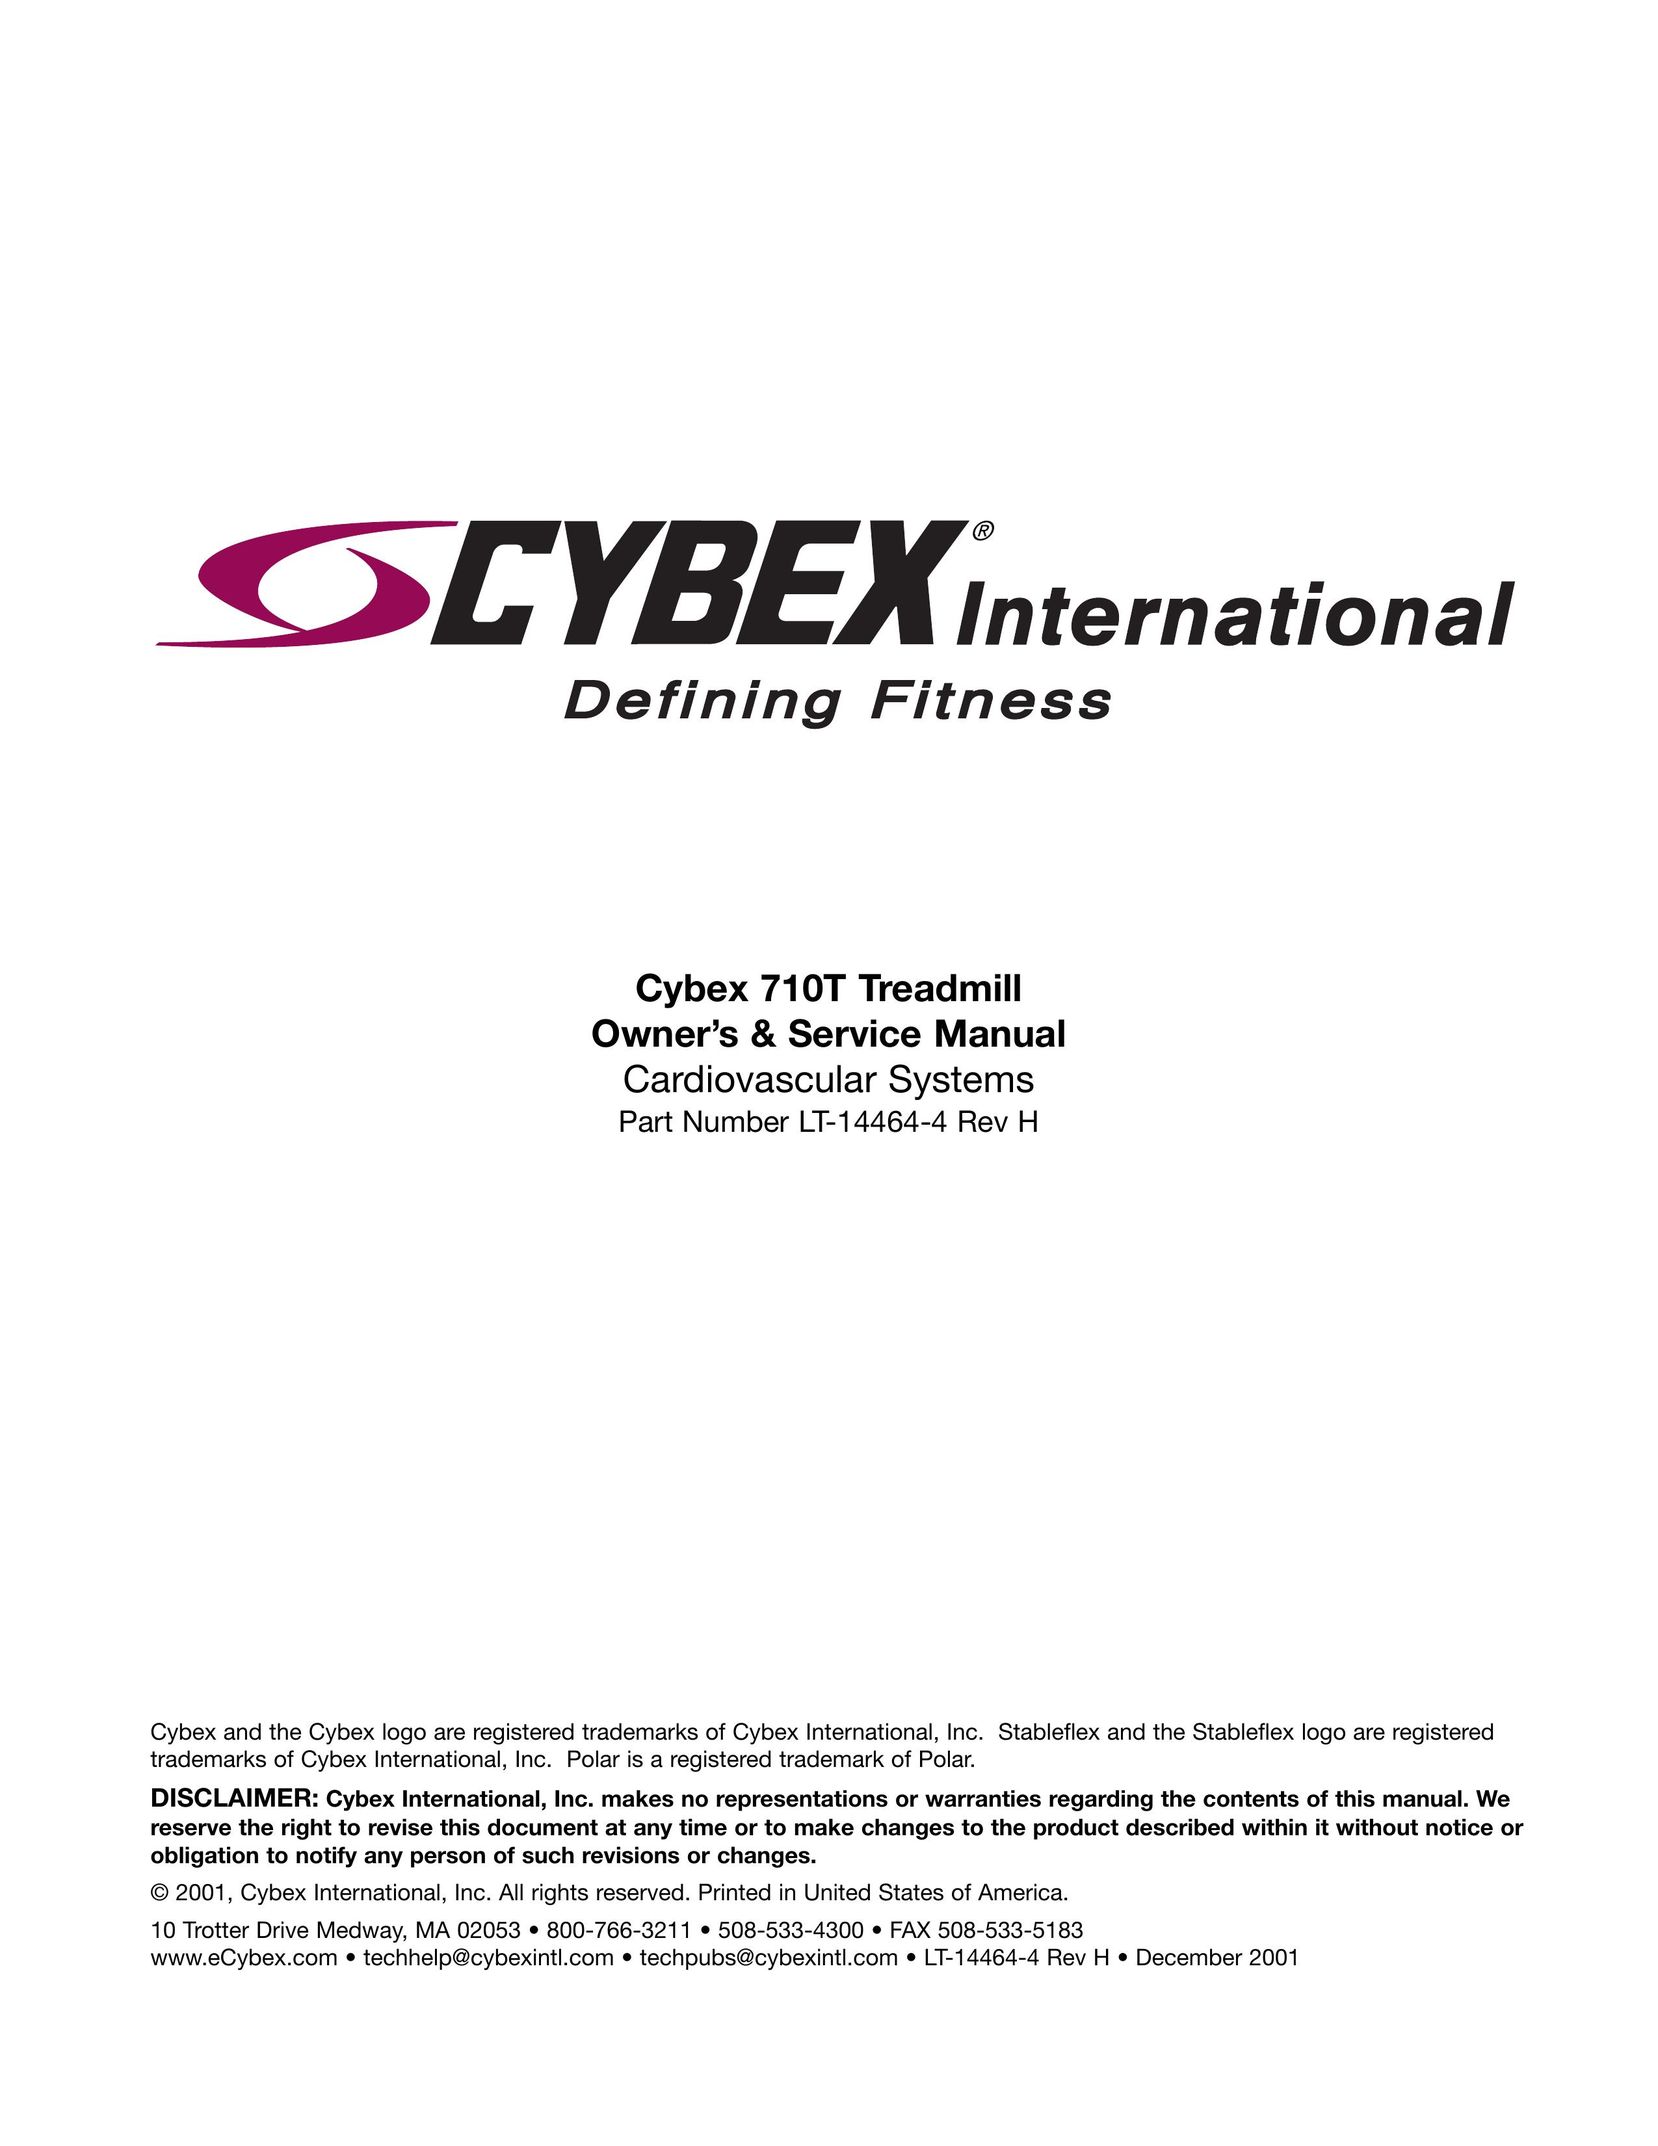 Cybex International 710T Treadmill User Manual